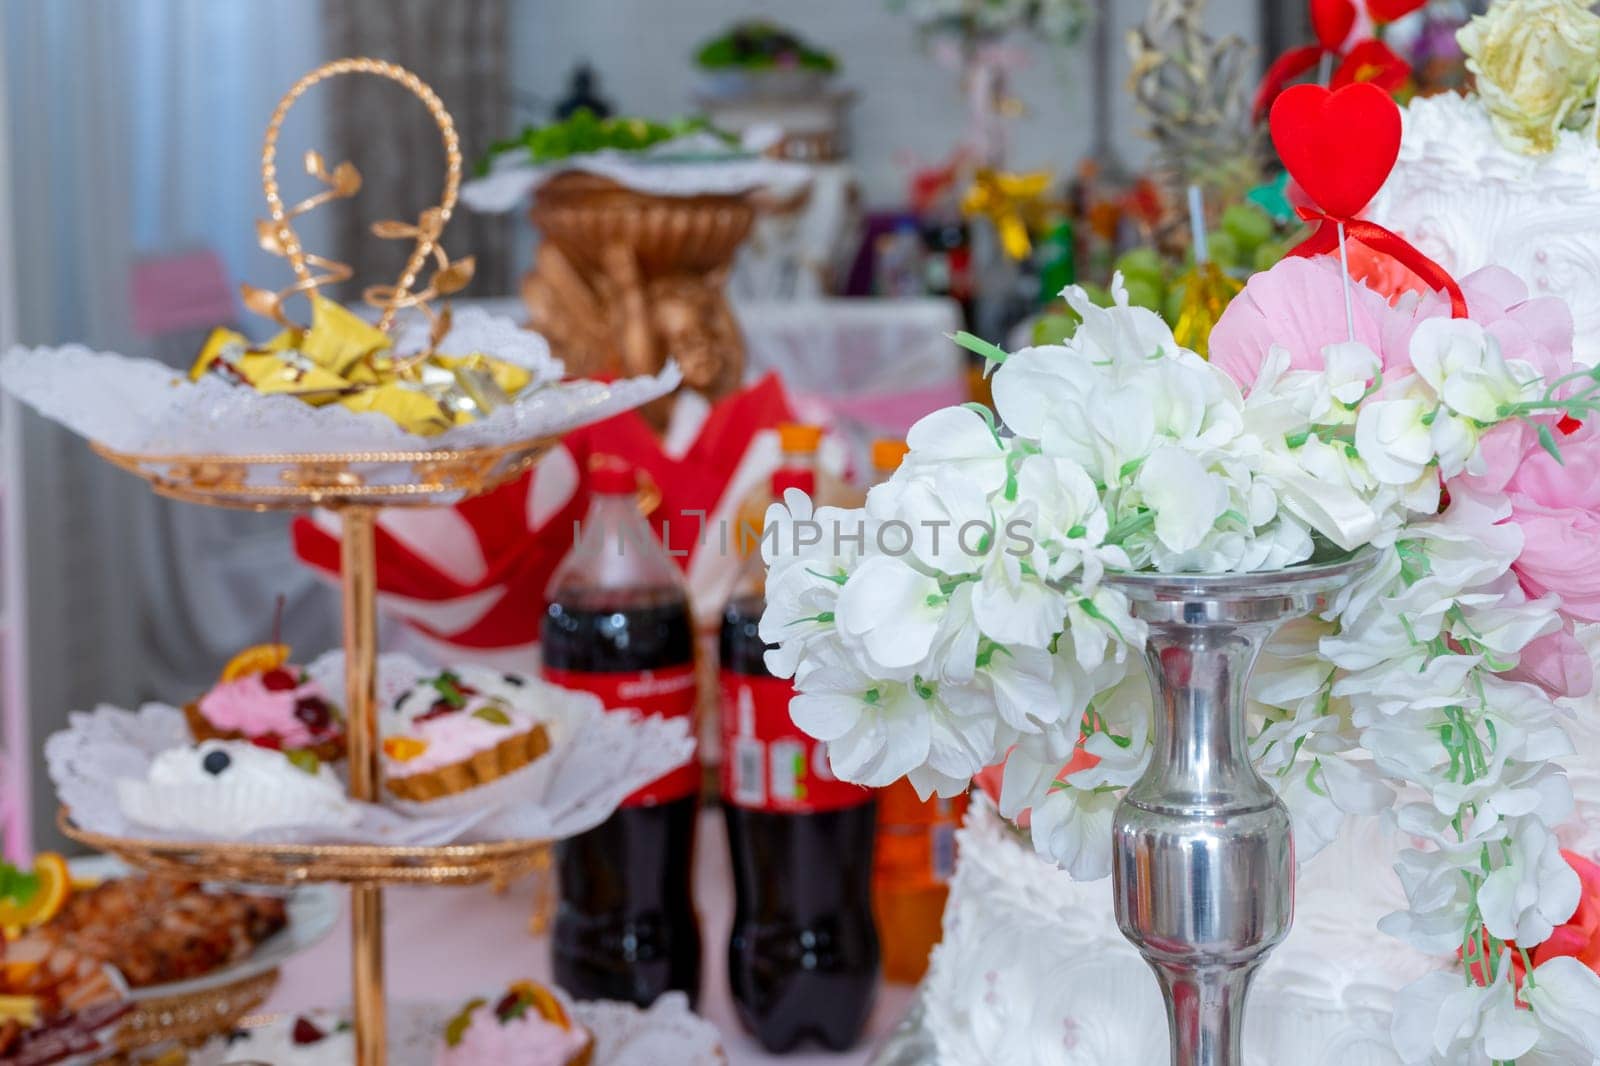 Decorating the wedding table at a gypsy wedding by Serhii_Voroshchuk